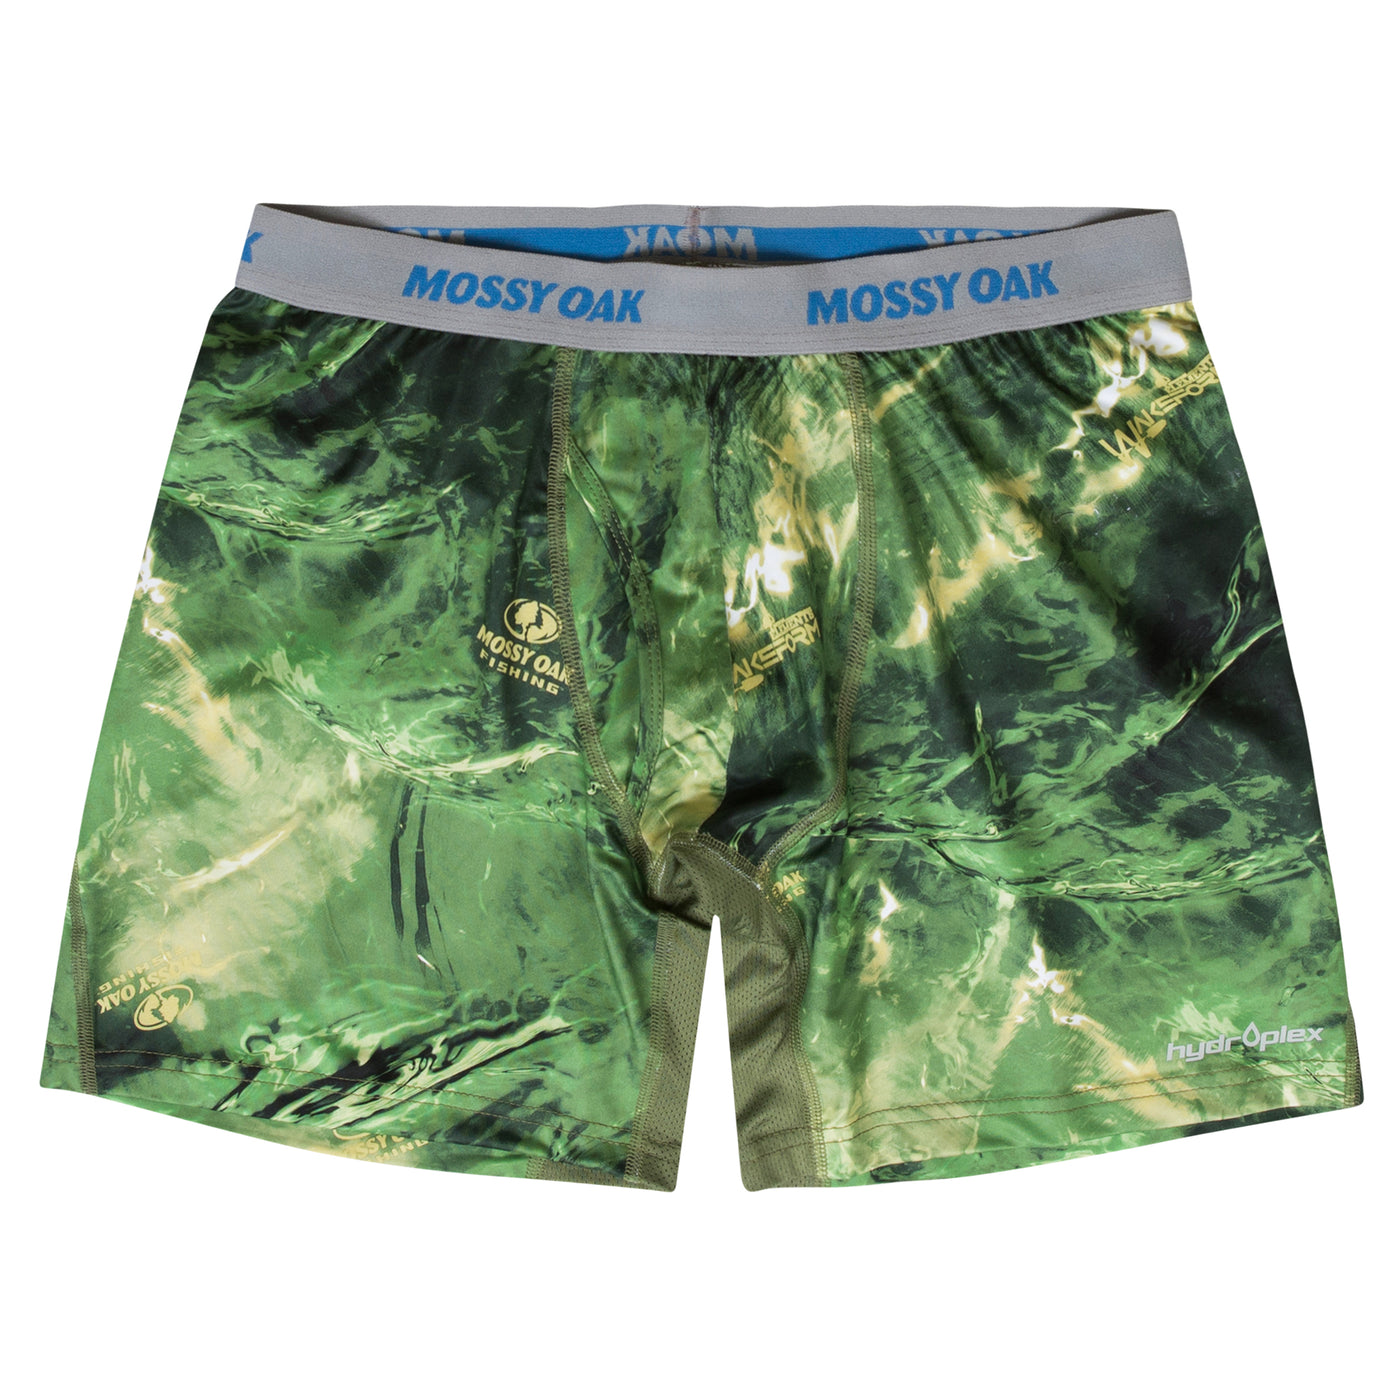 Mossy Oak Camo Boxer Brief – The Mossy Oak Store